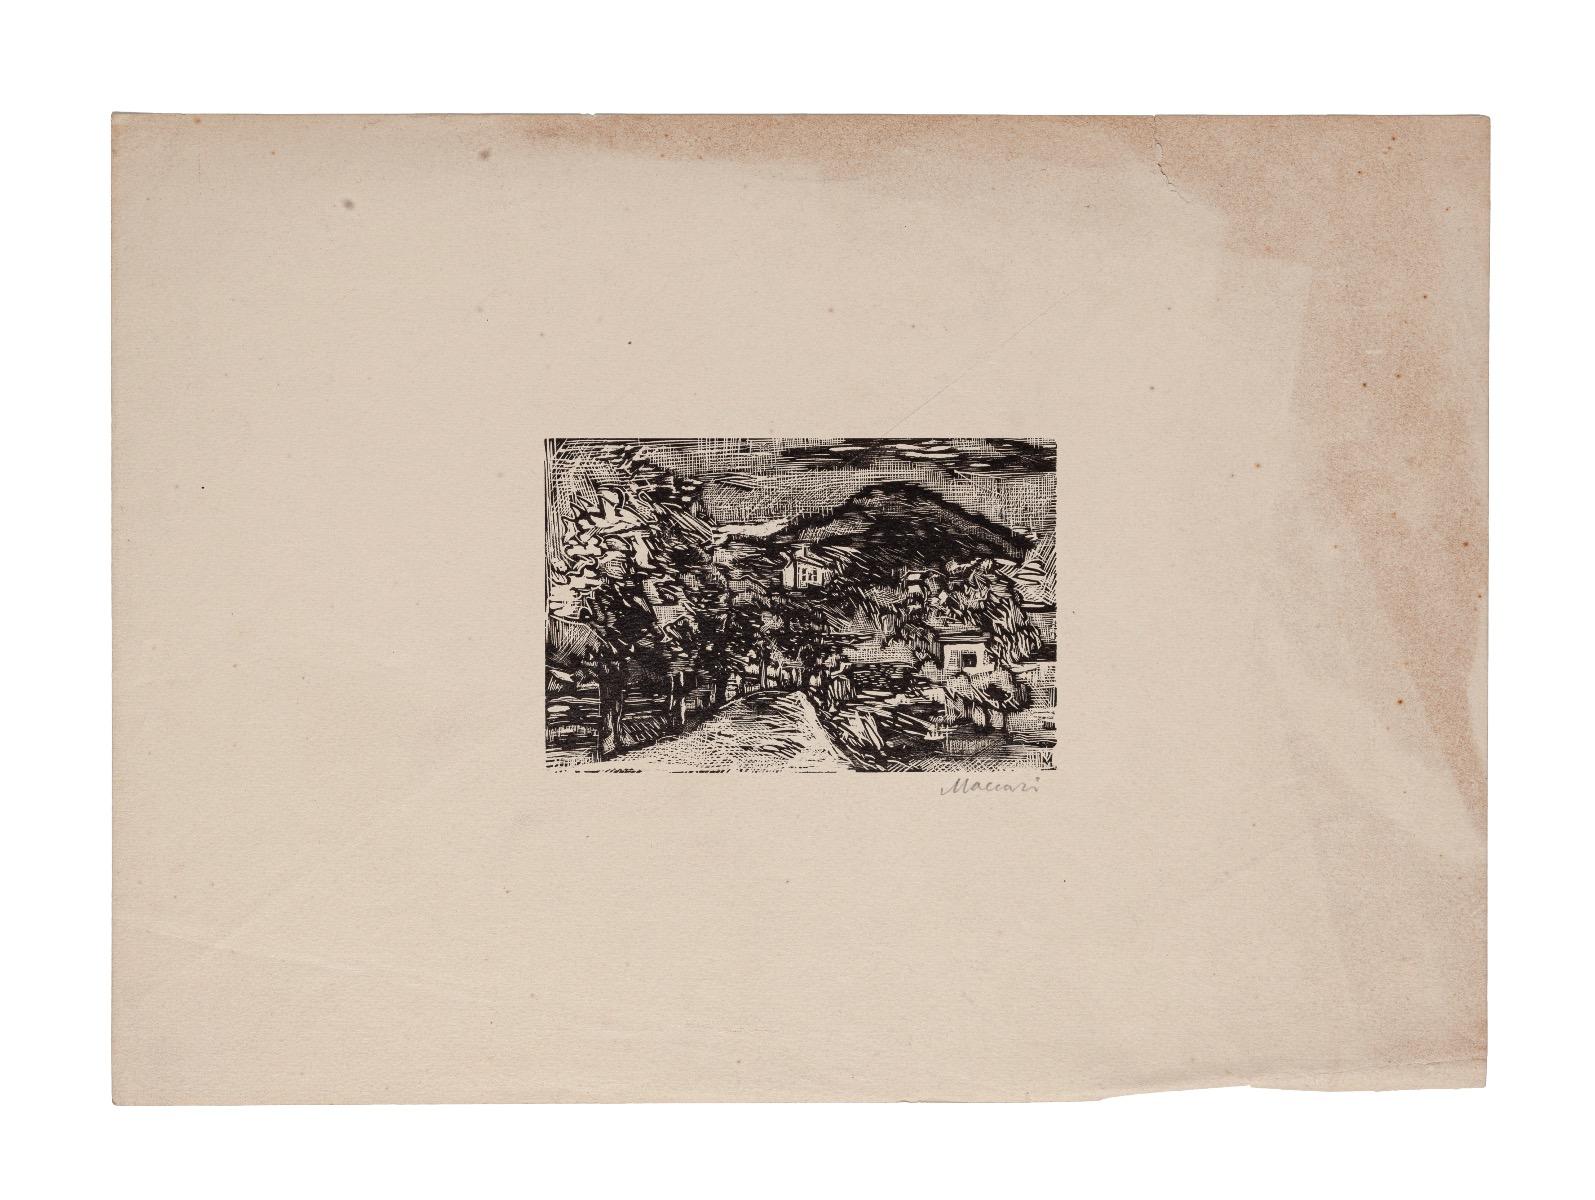 Landscape - Woodcut Print on Paper by Mino Maccari - Mid-20th Century